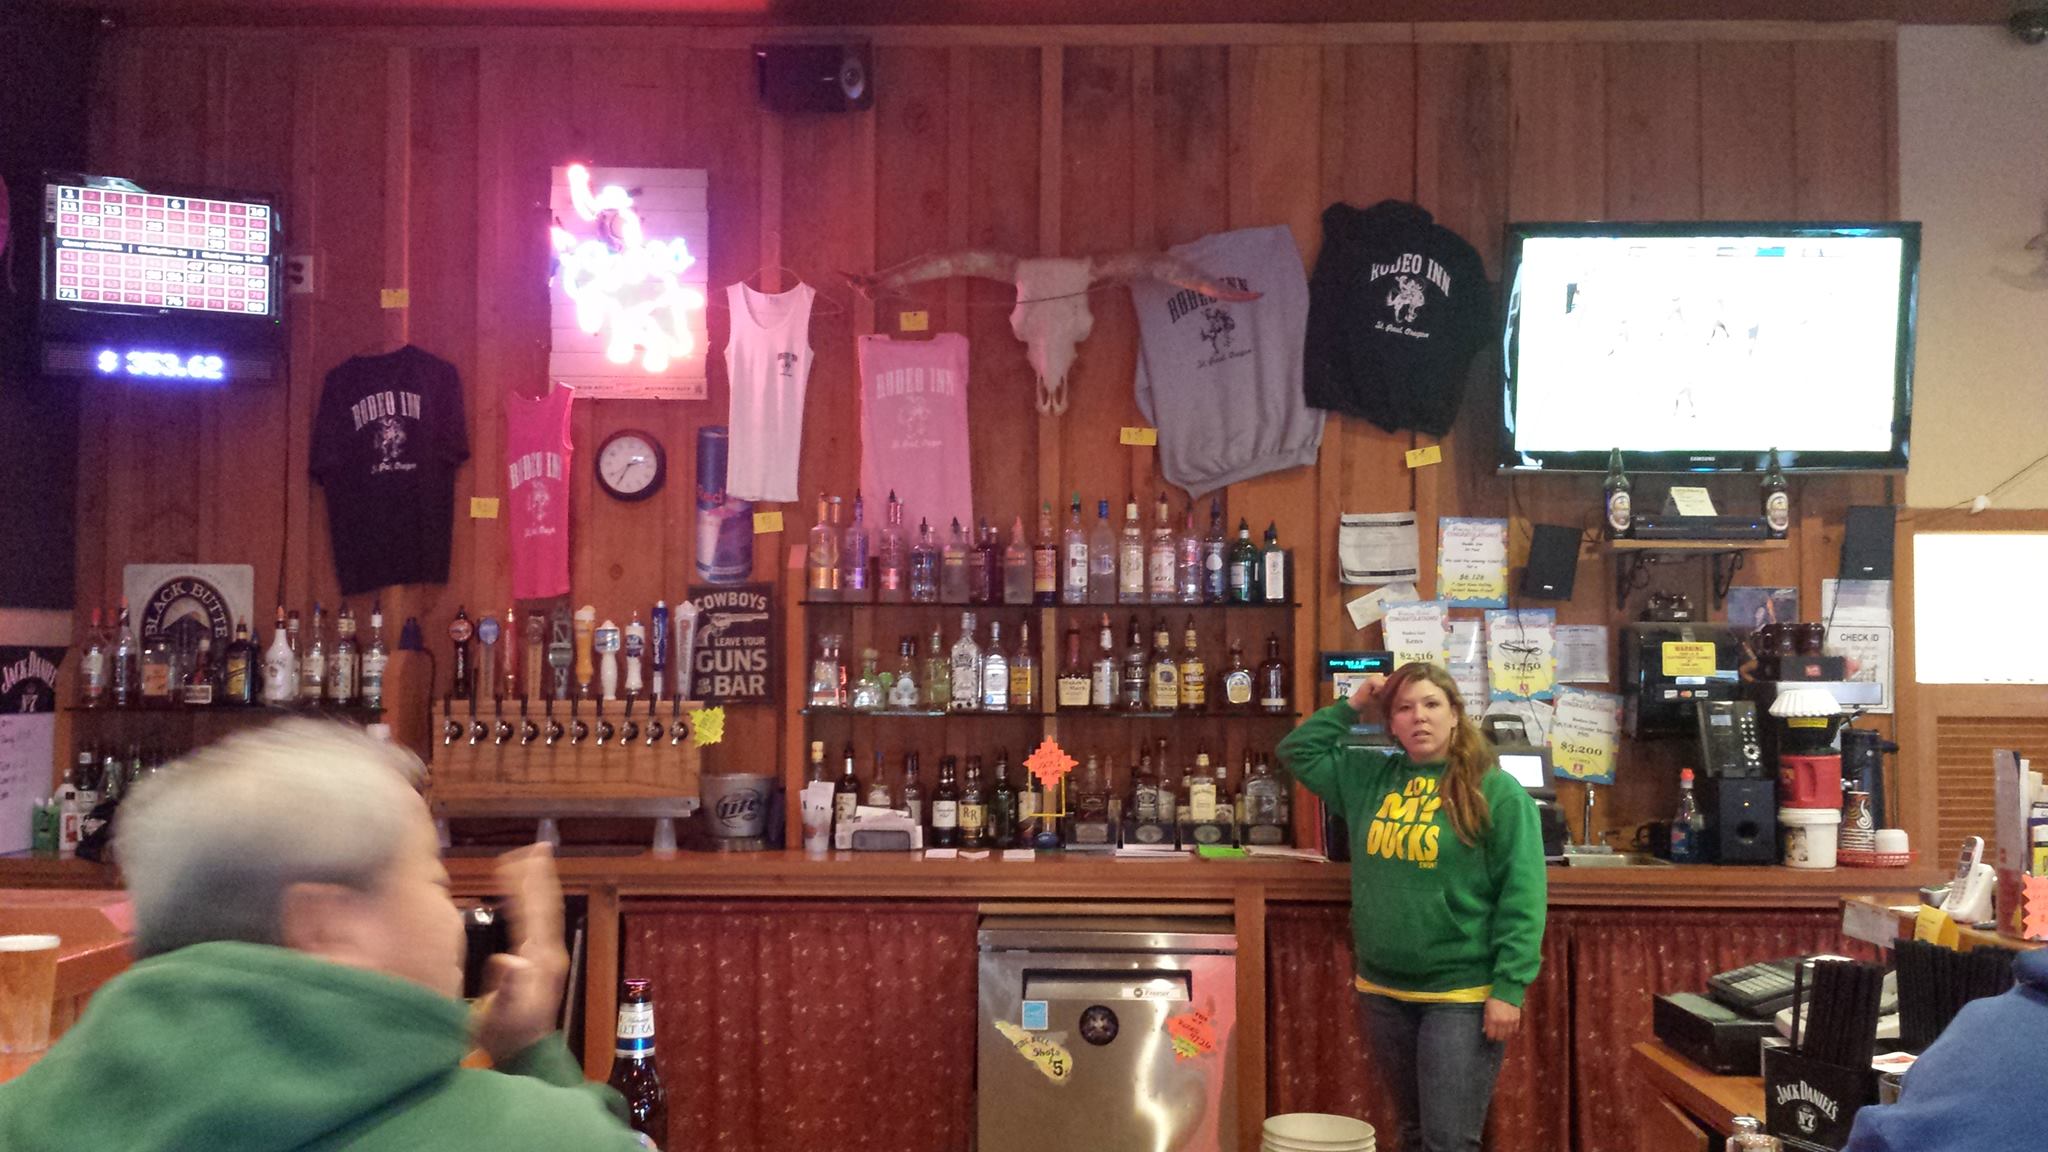 Rodeo Inn Bar